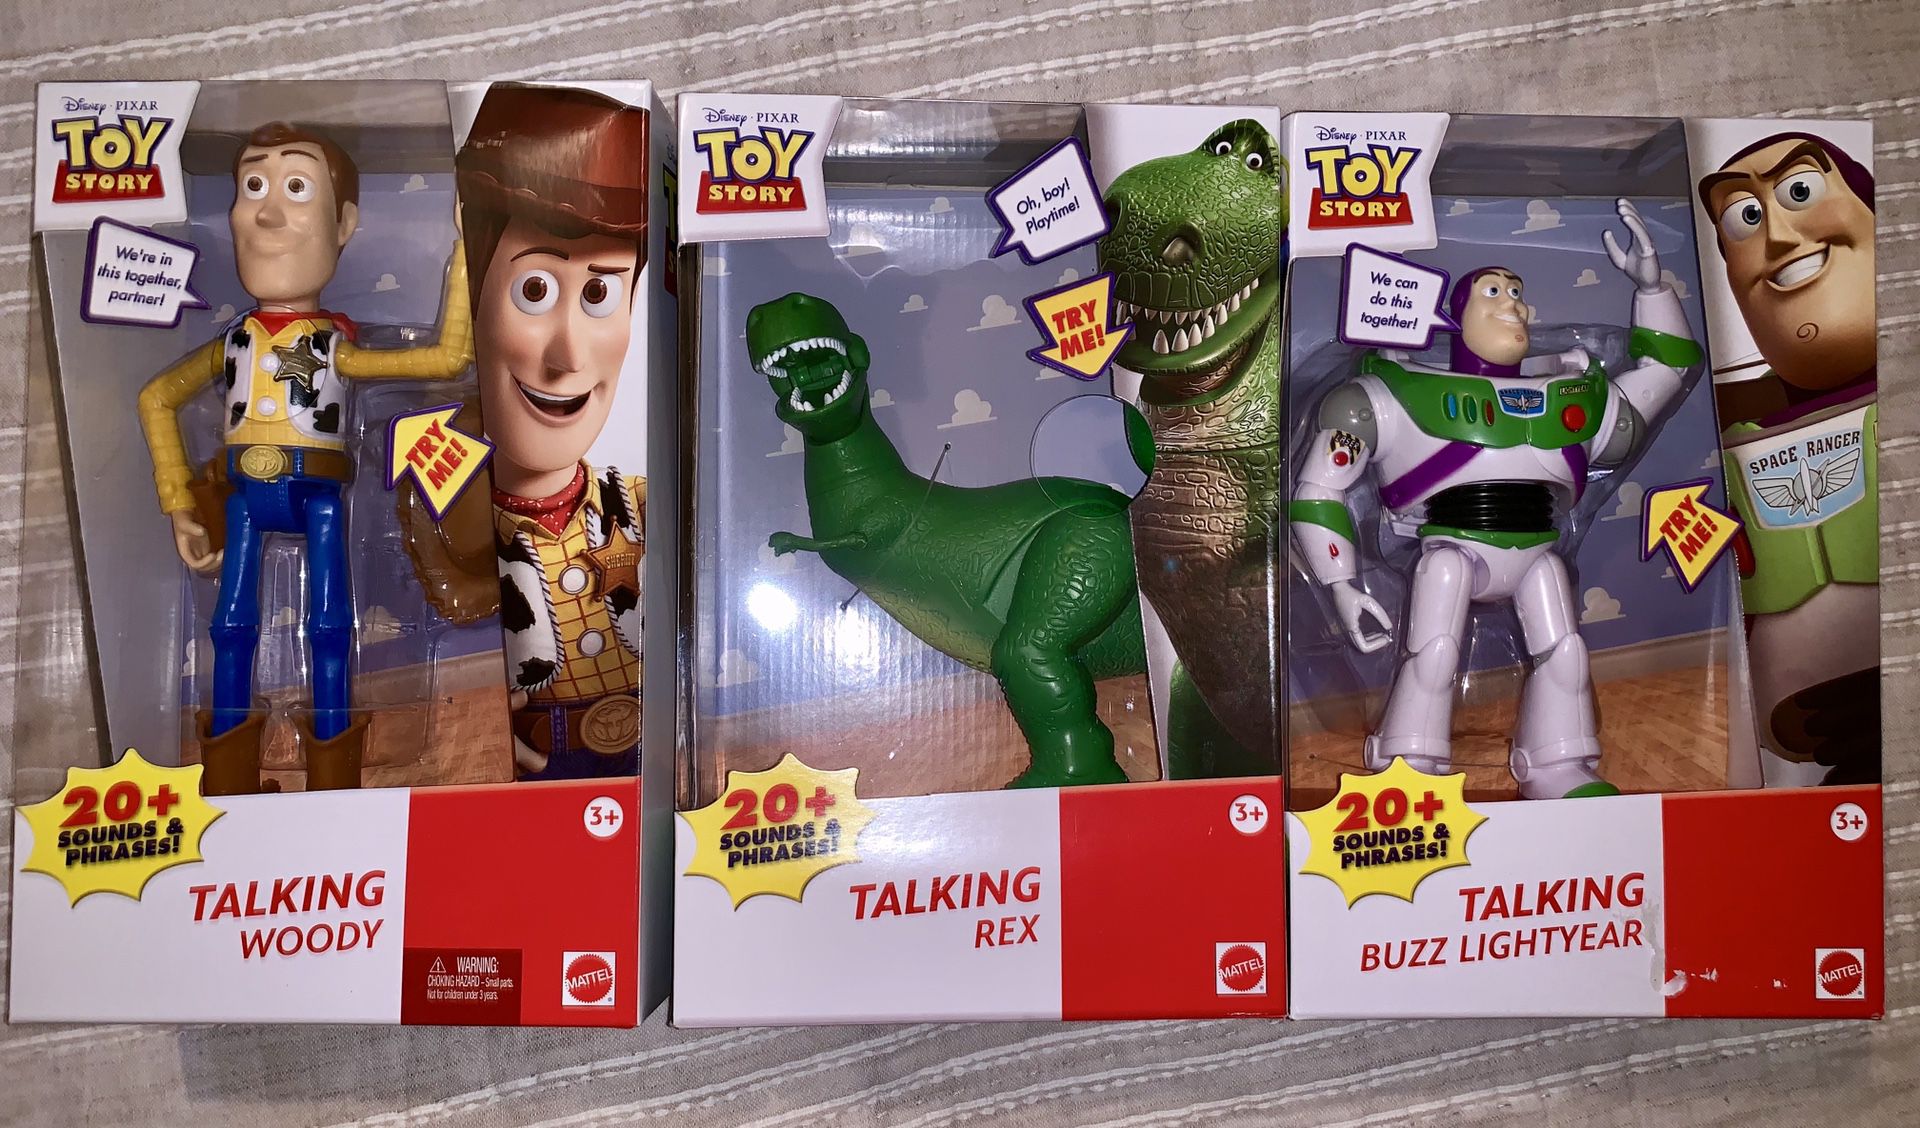 Disney X Pixar toy story collectibles toys